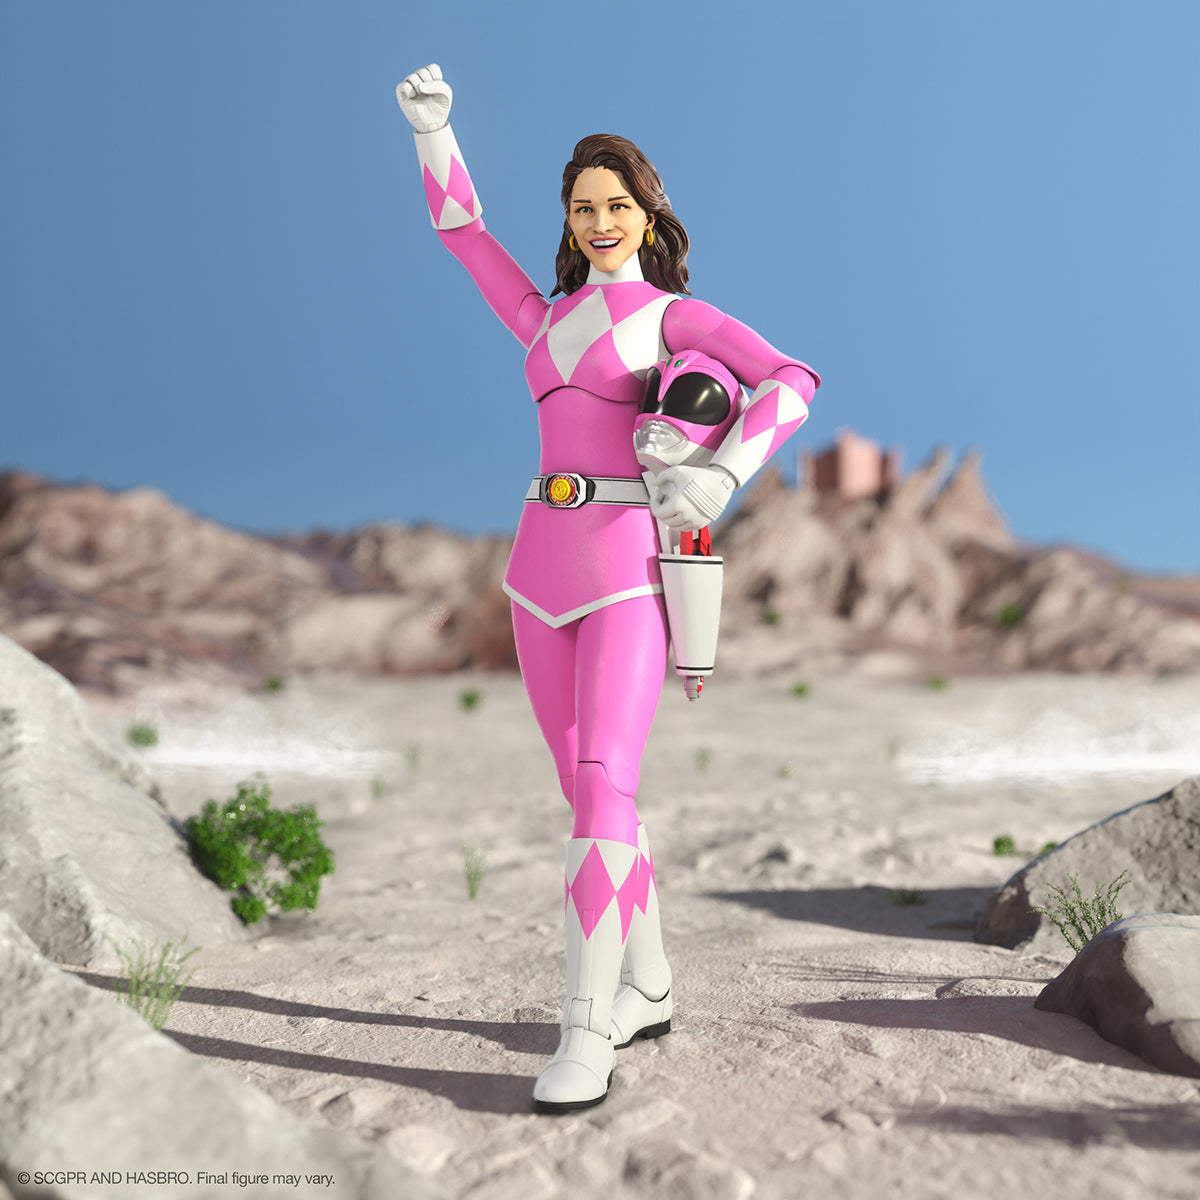 Pink Ranger Super7 Power Rangers ULTIMATES!